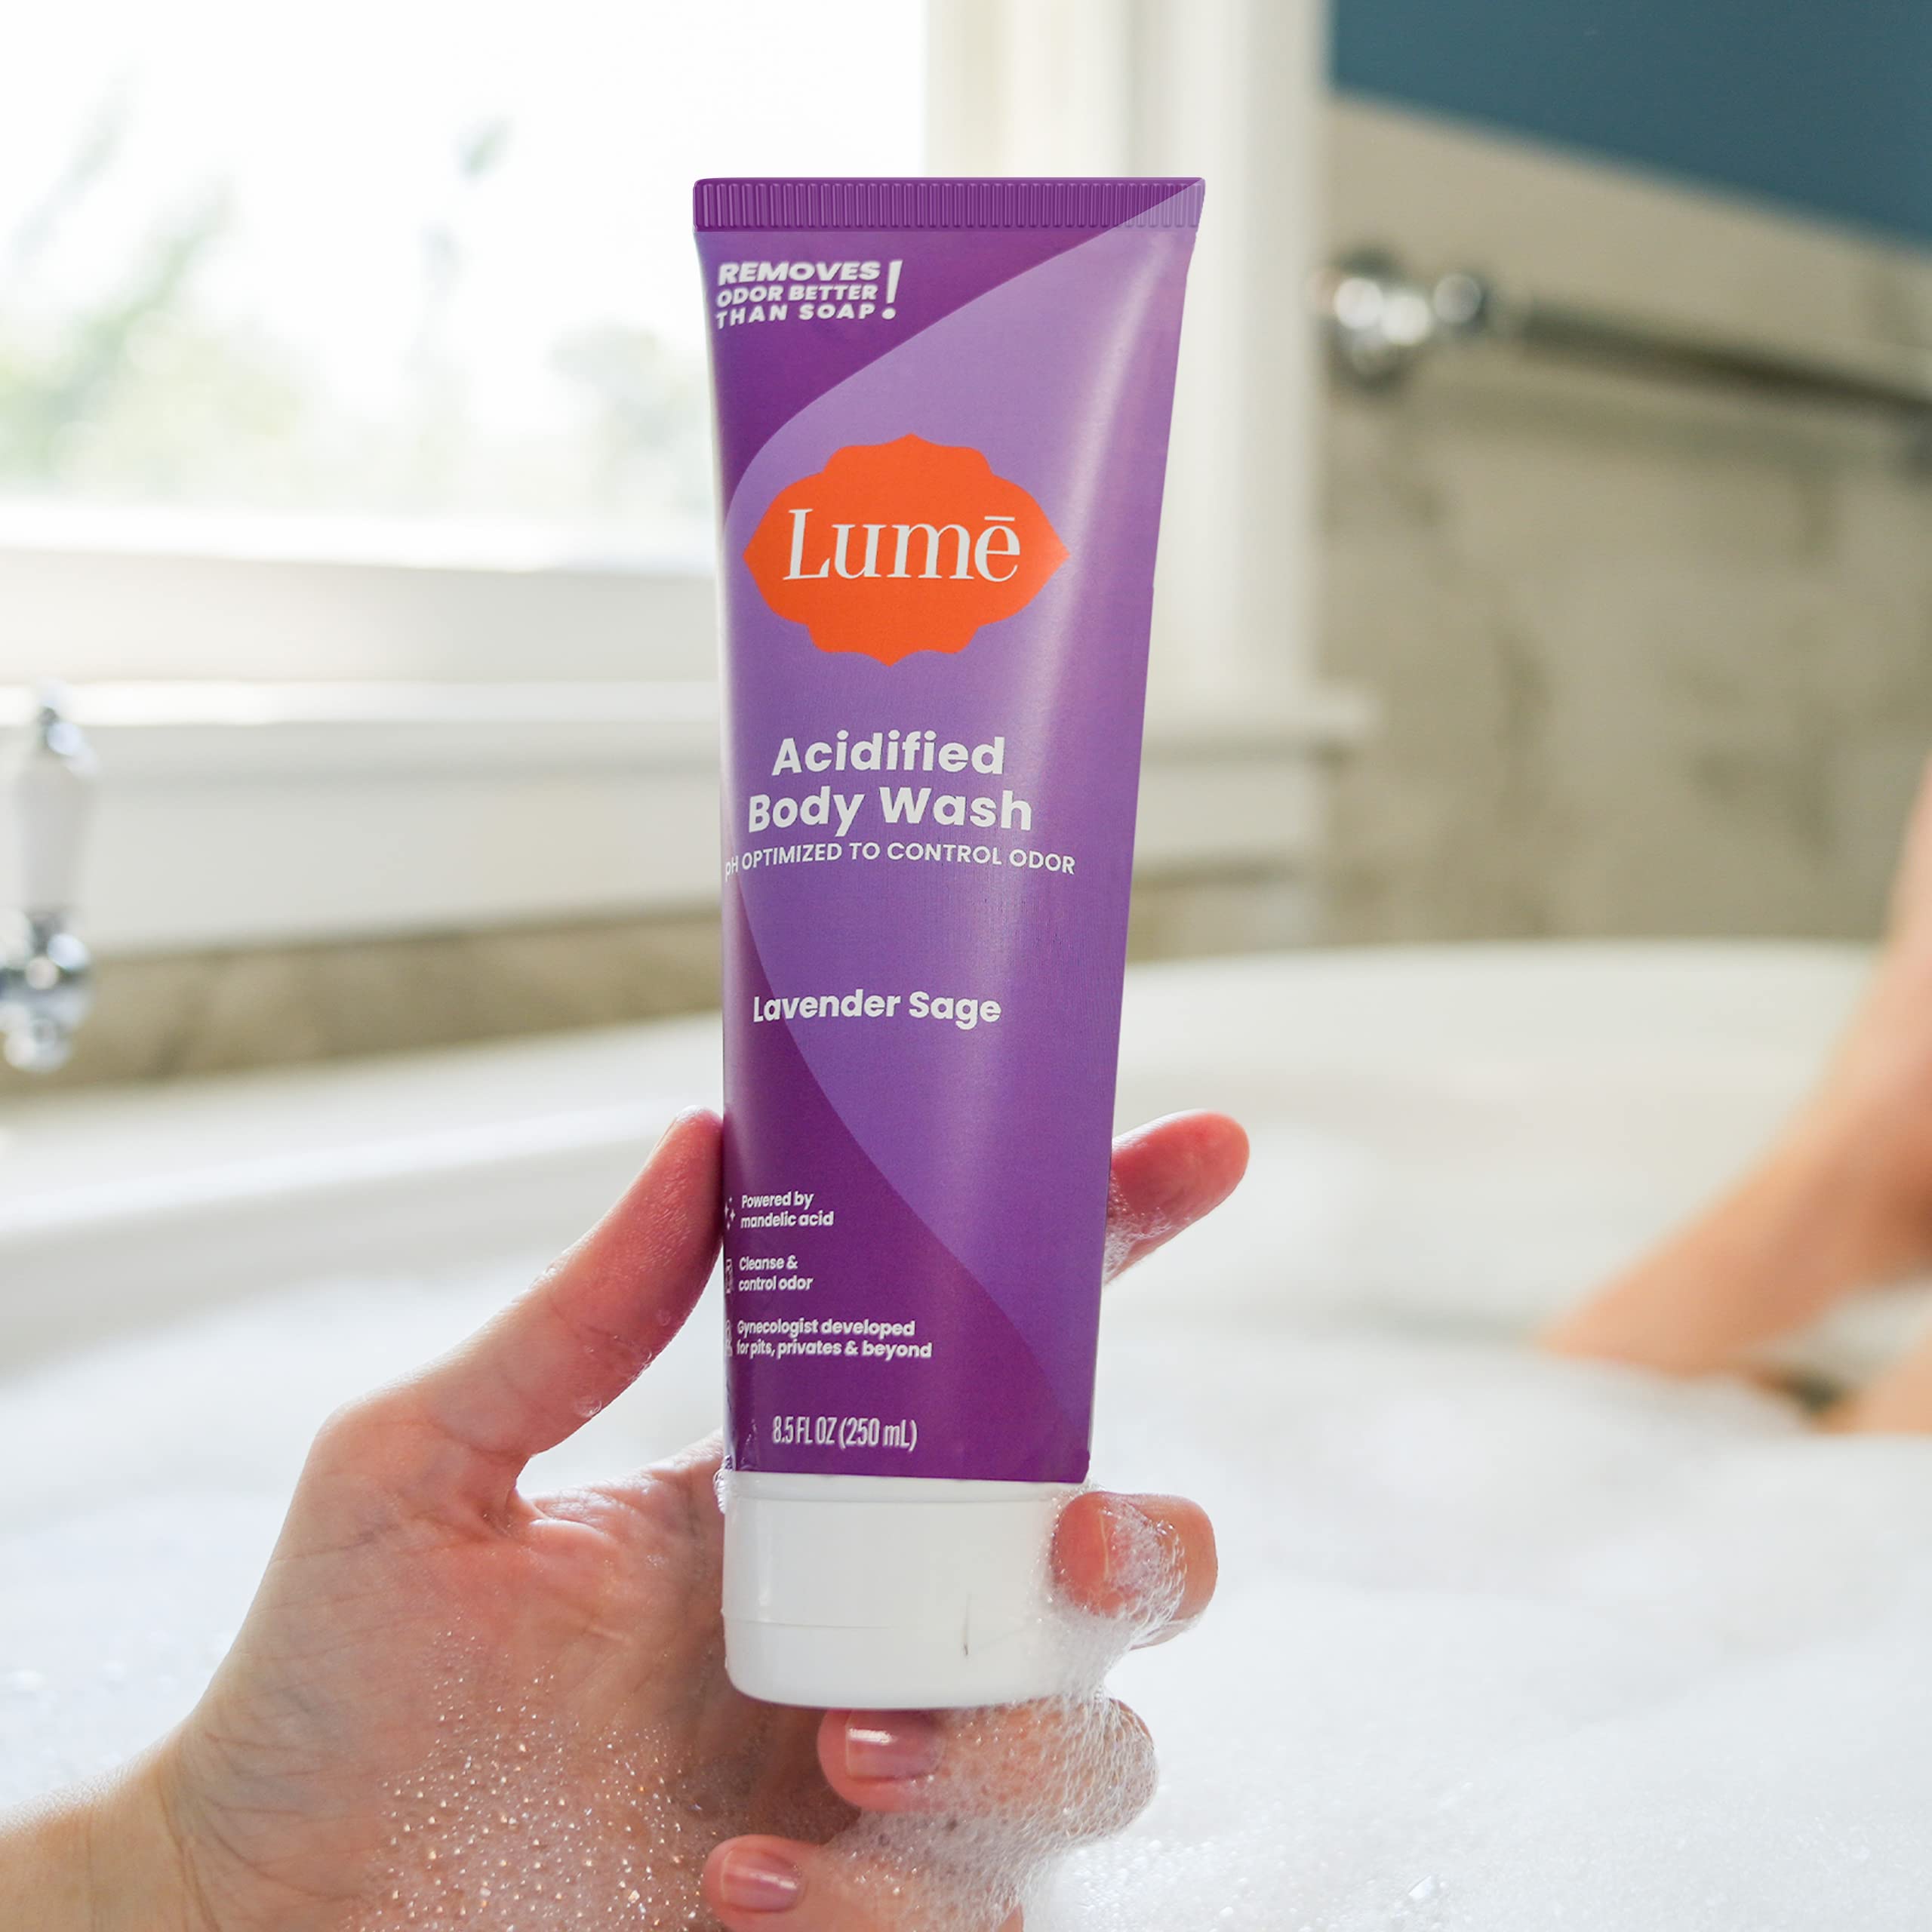 Lume Acidified Body Wash - 24 Hour Odor Control - Removes Odor Better than Soap - Moisturizing Formula - SLS Free, Paraben Free - Safe For Sensitive Skin - 8.5 ounce (Lavender Sage)